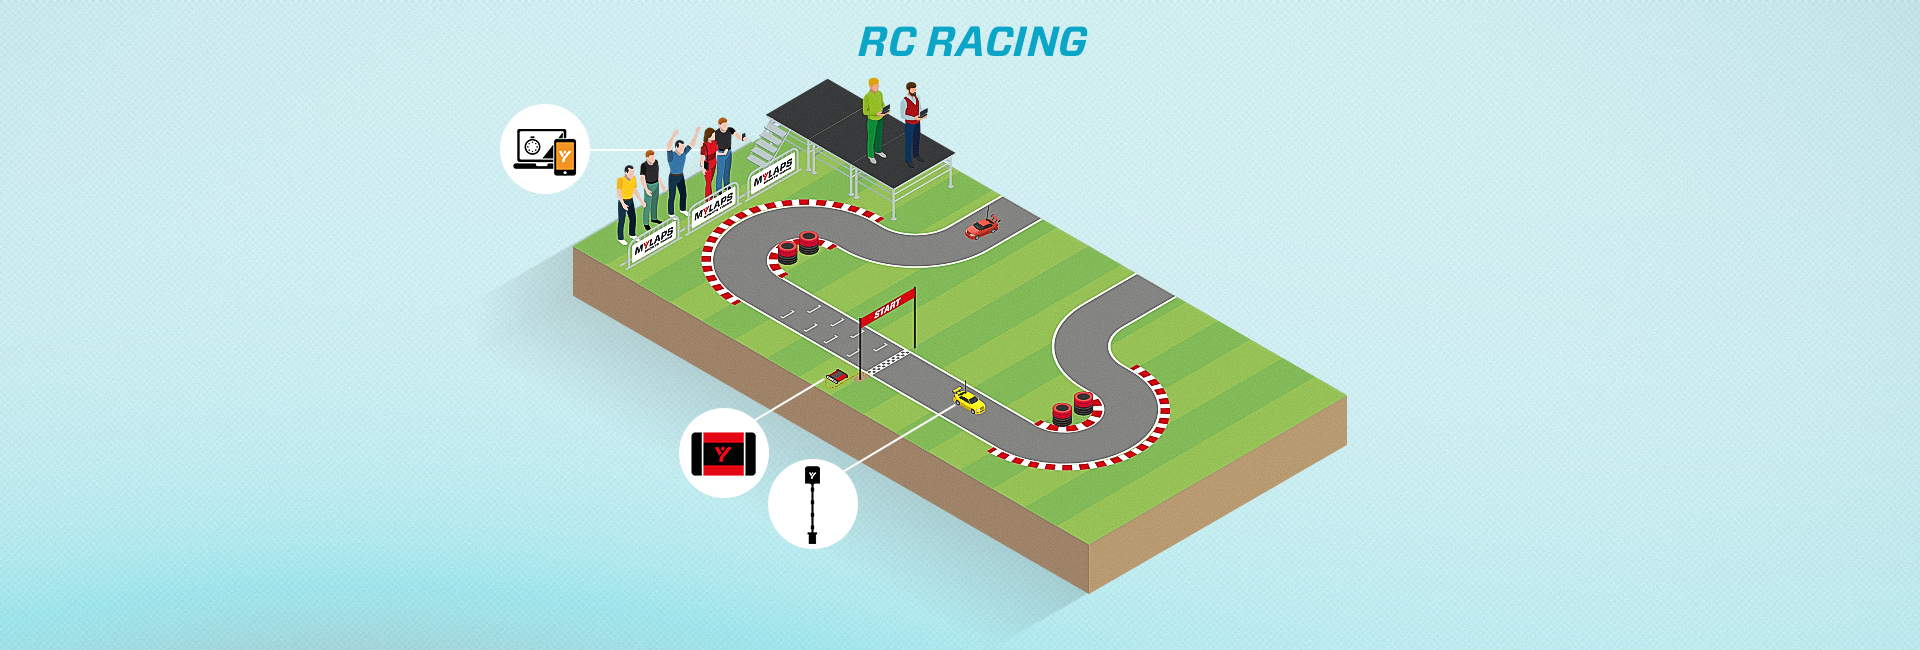 RC & Drone Racing 1